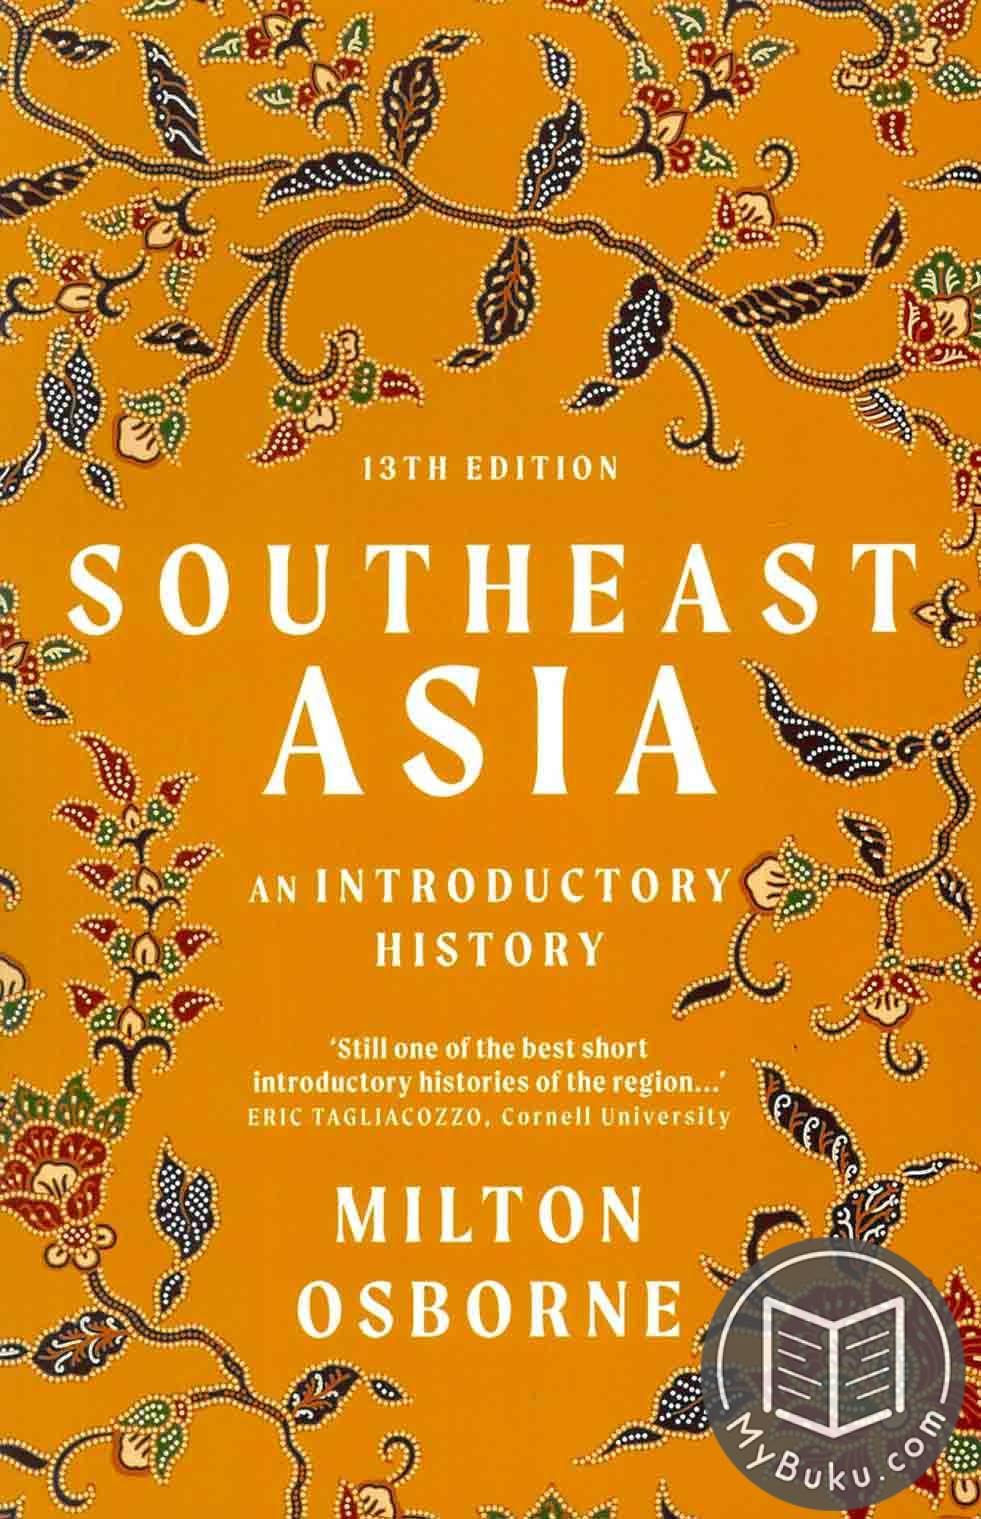 Southeast Asia : An Introductory History -   Milton Osborne - 9781760877132 - Allen & Unwin